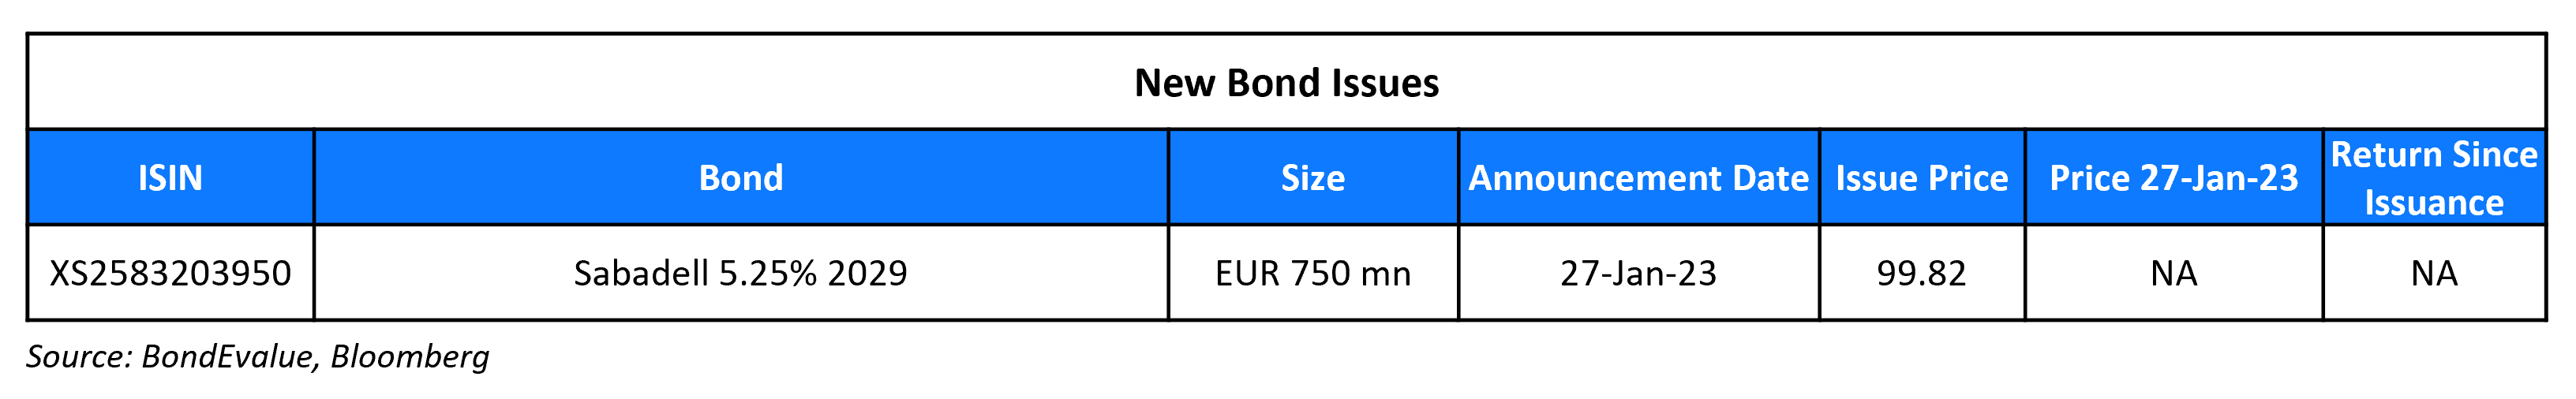 New Bond Issues 30 Jan 23